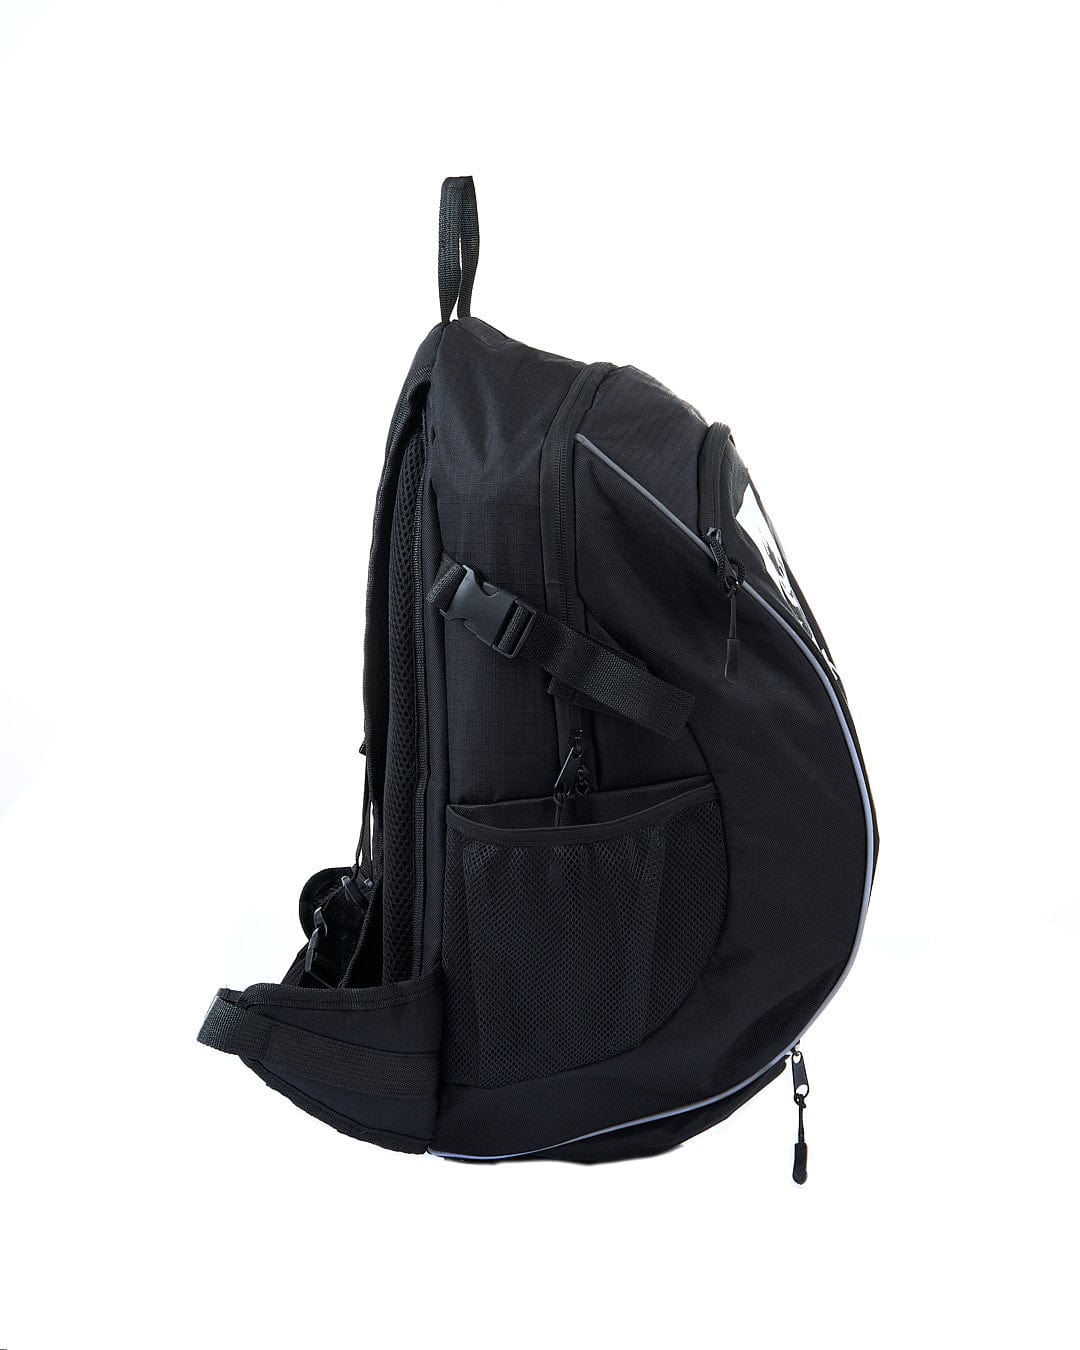 A Saltrock Cyclone - Urban Backpack - Black on a white background.